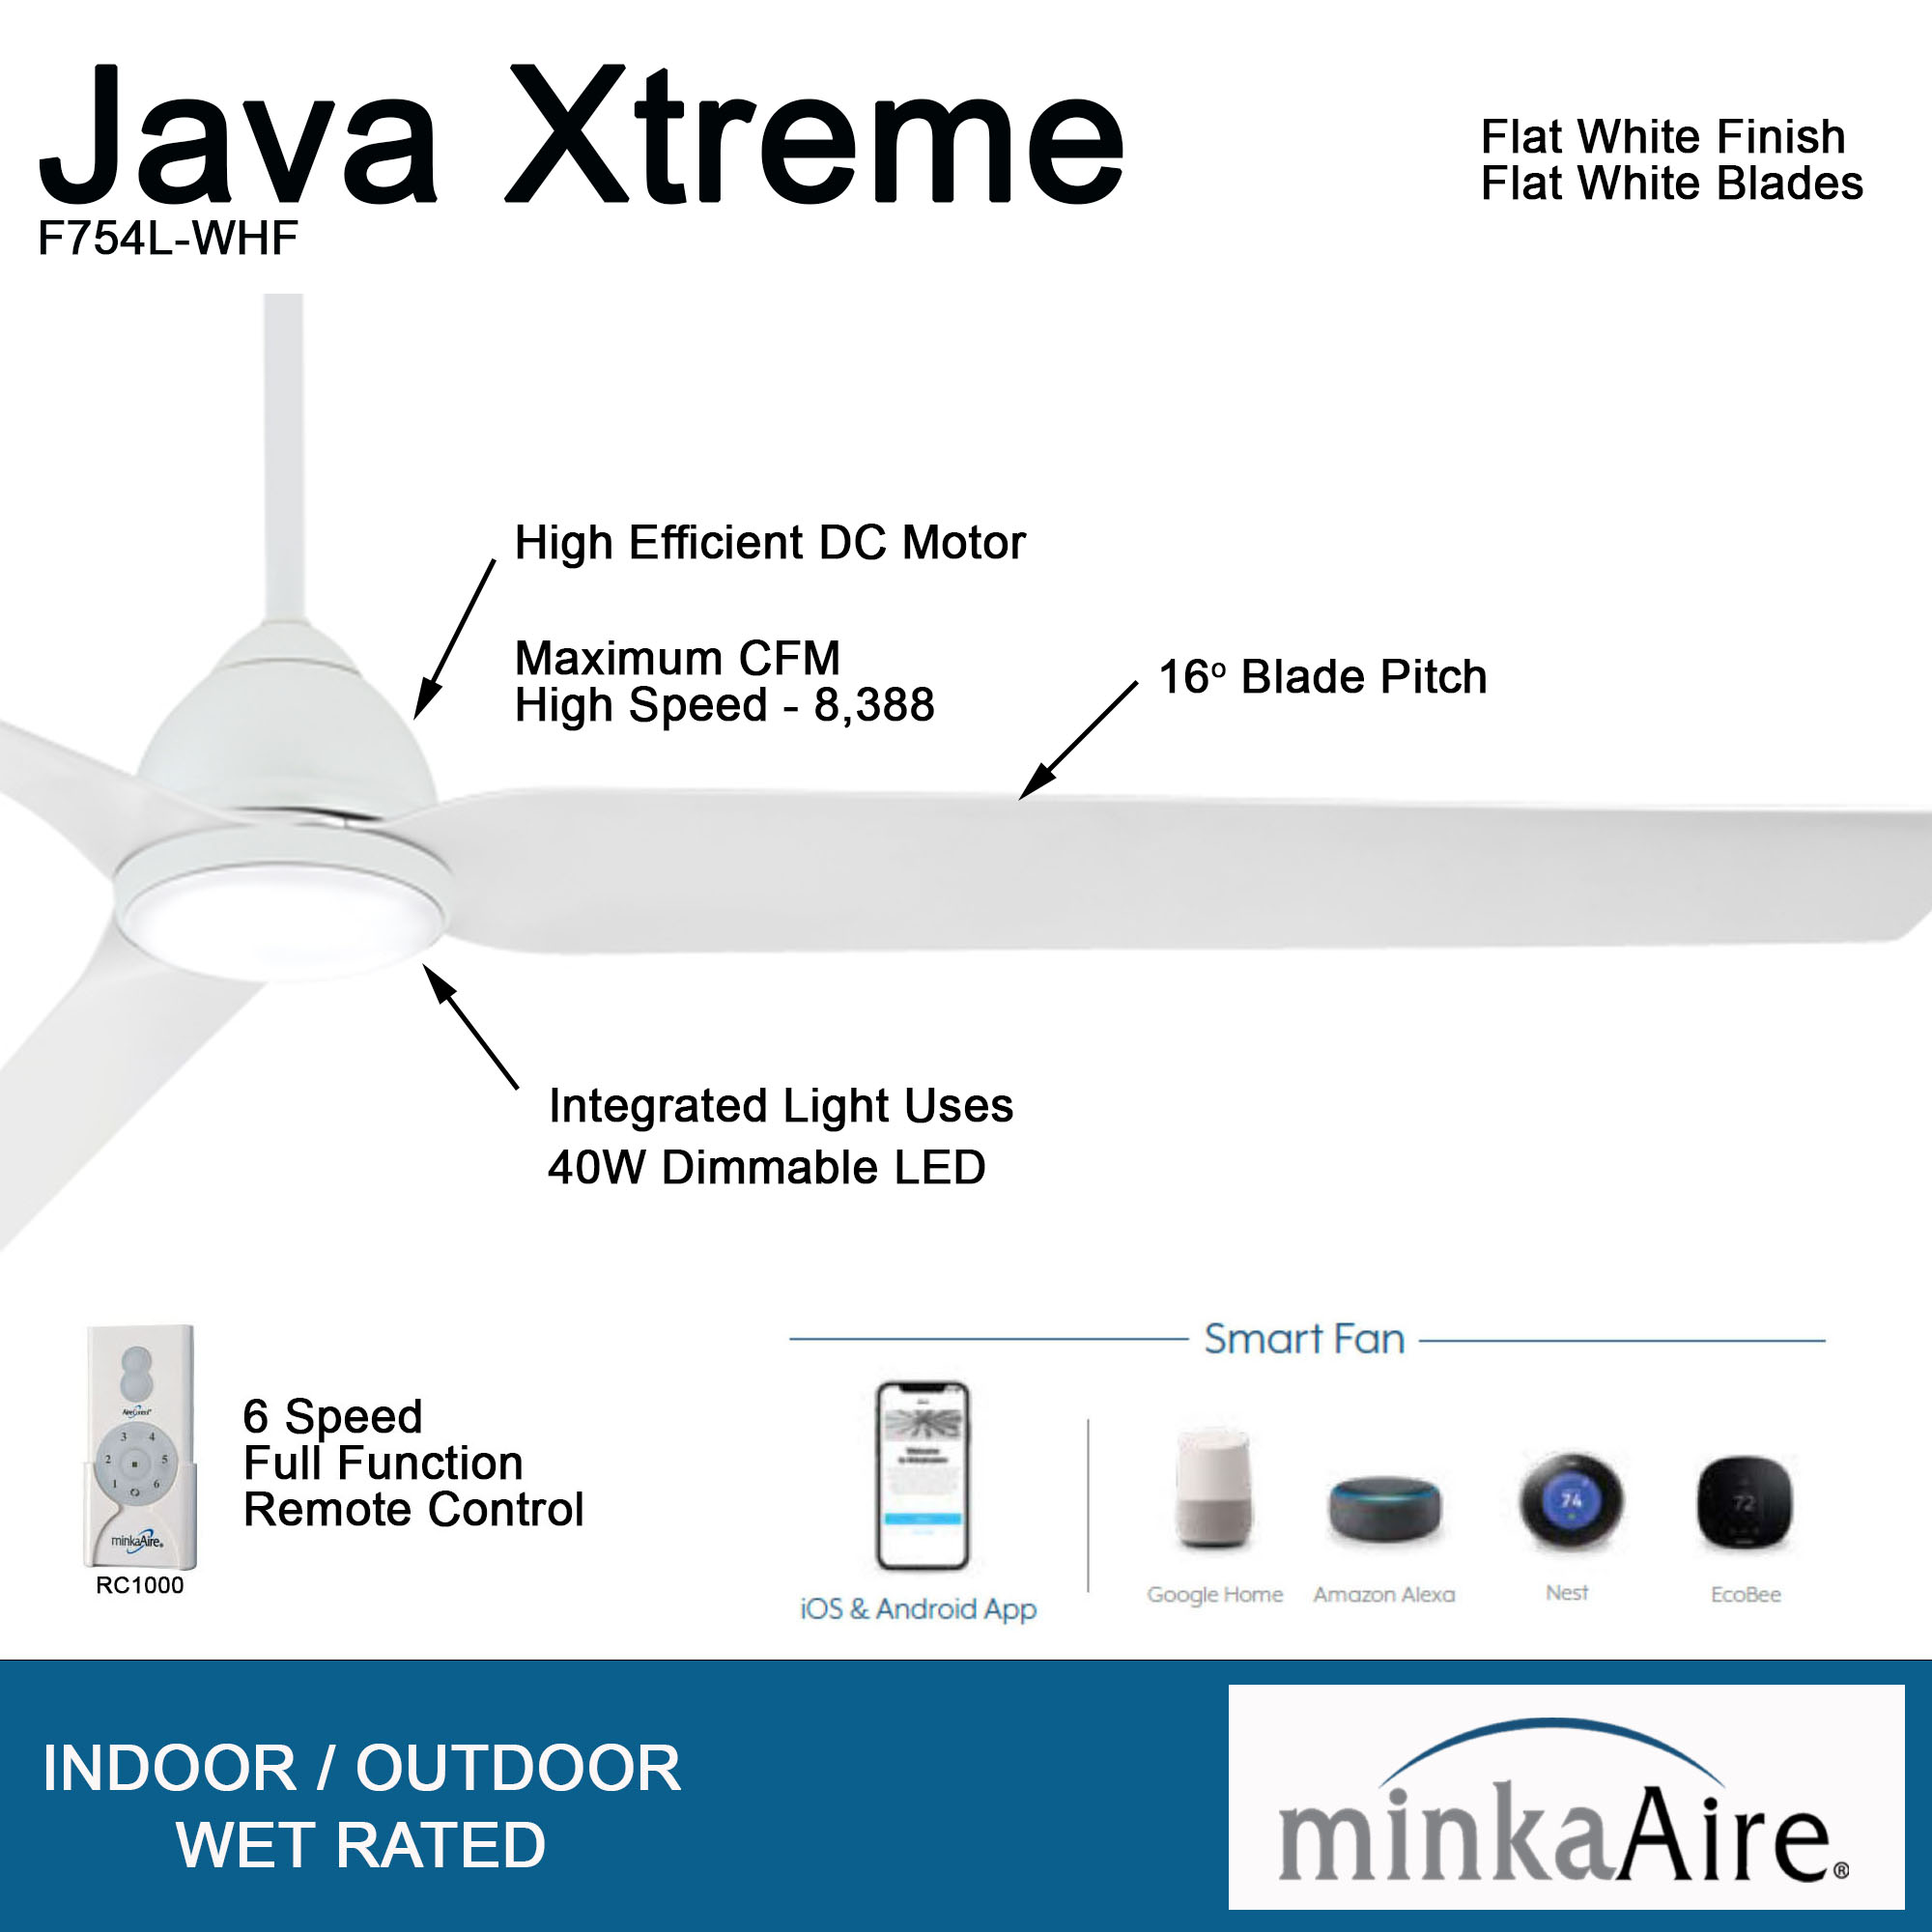 Java Xtreme - 84" LED Ceiling Fan